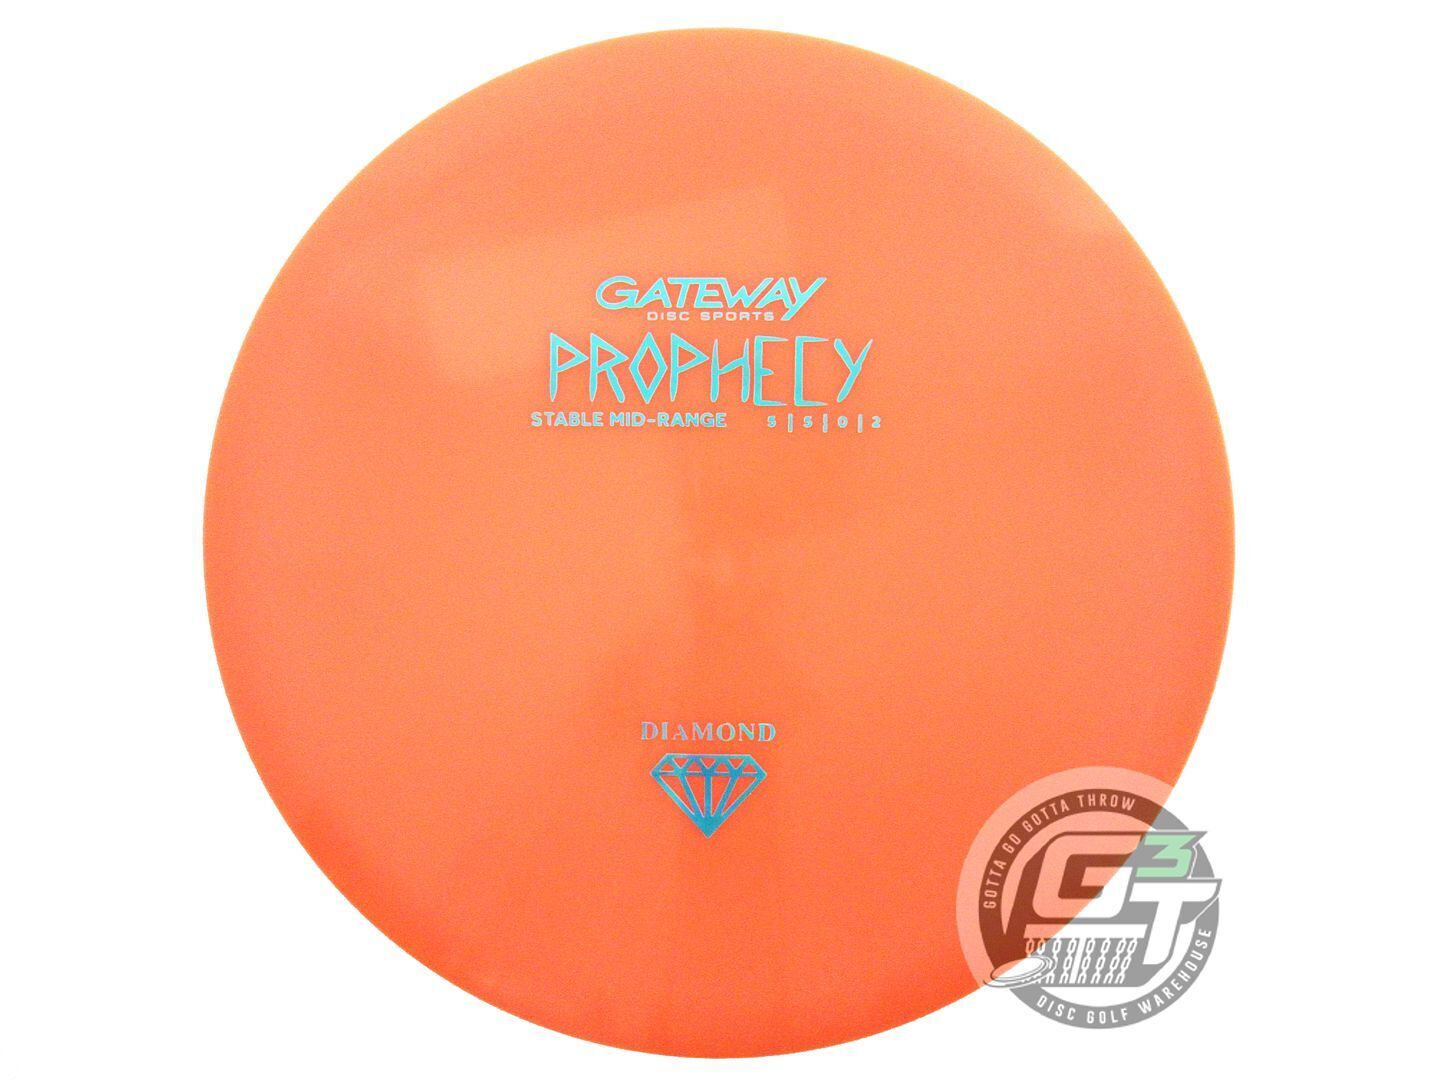 Gateway Diamond Prophecy Midrange Golf Disc (Individually Listed)